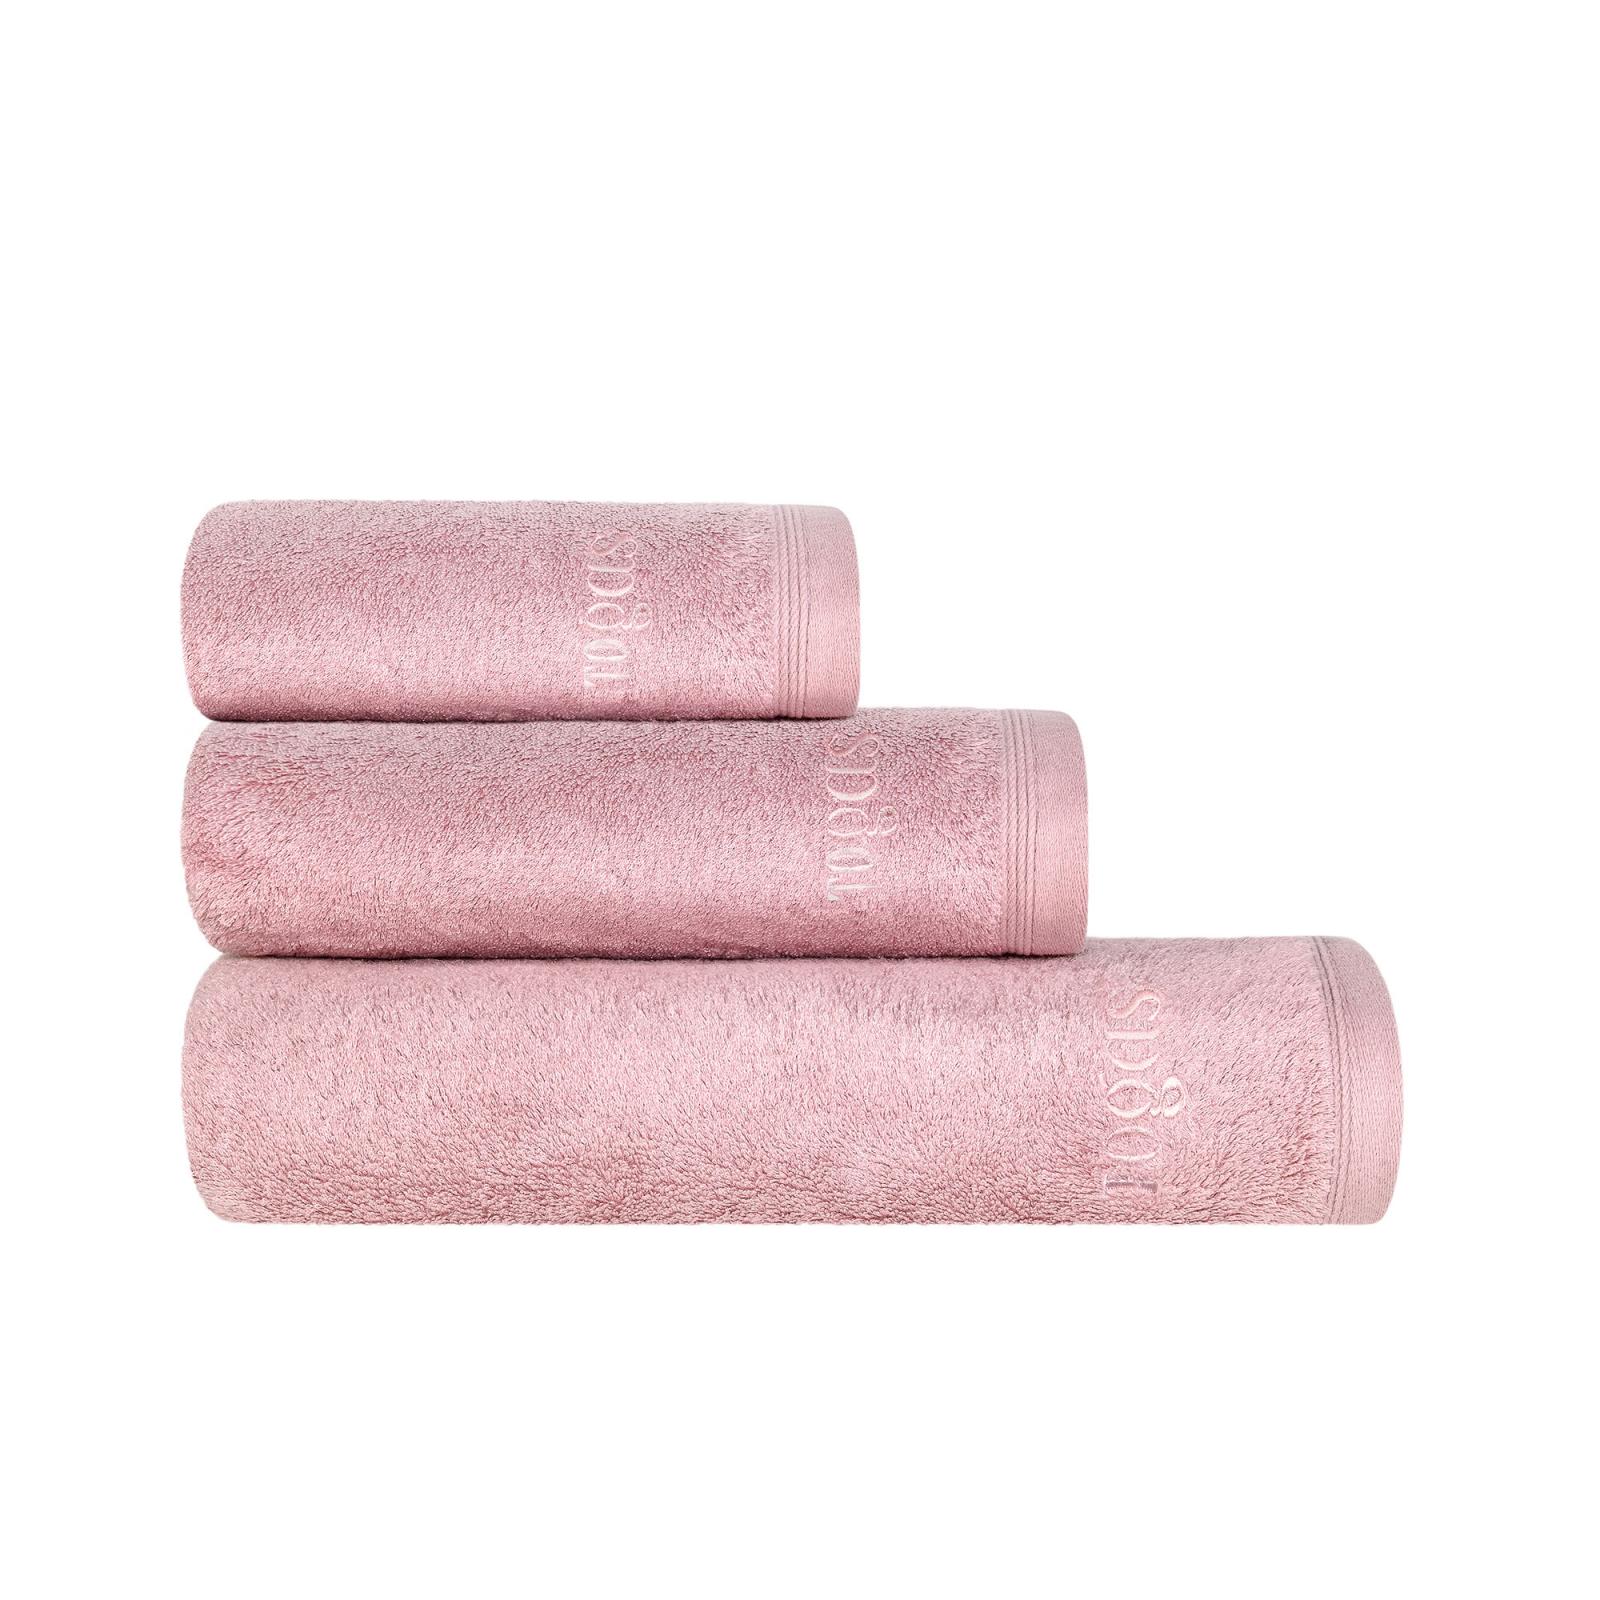 Полотенце 40х60 см Пуатье розовое Togas полотенце togas пуатье экрю 40х60 см